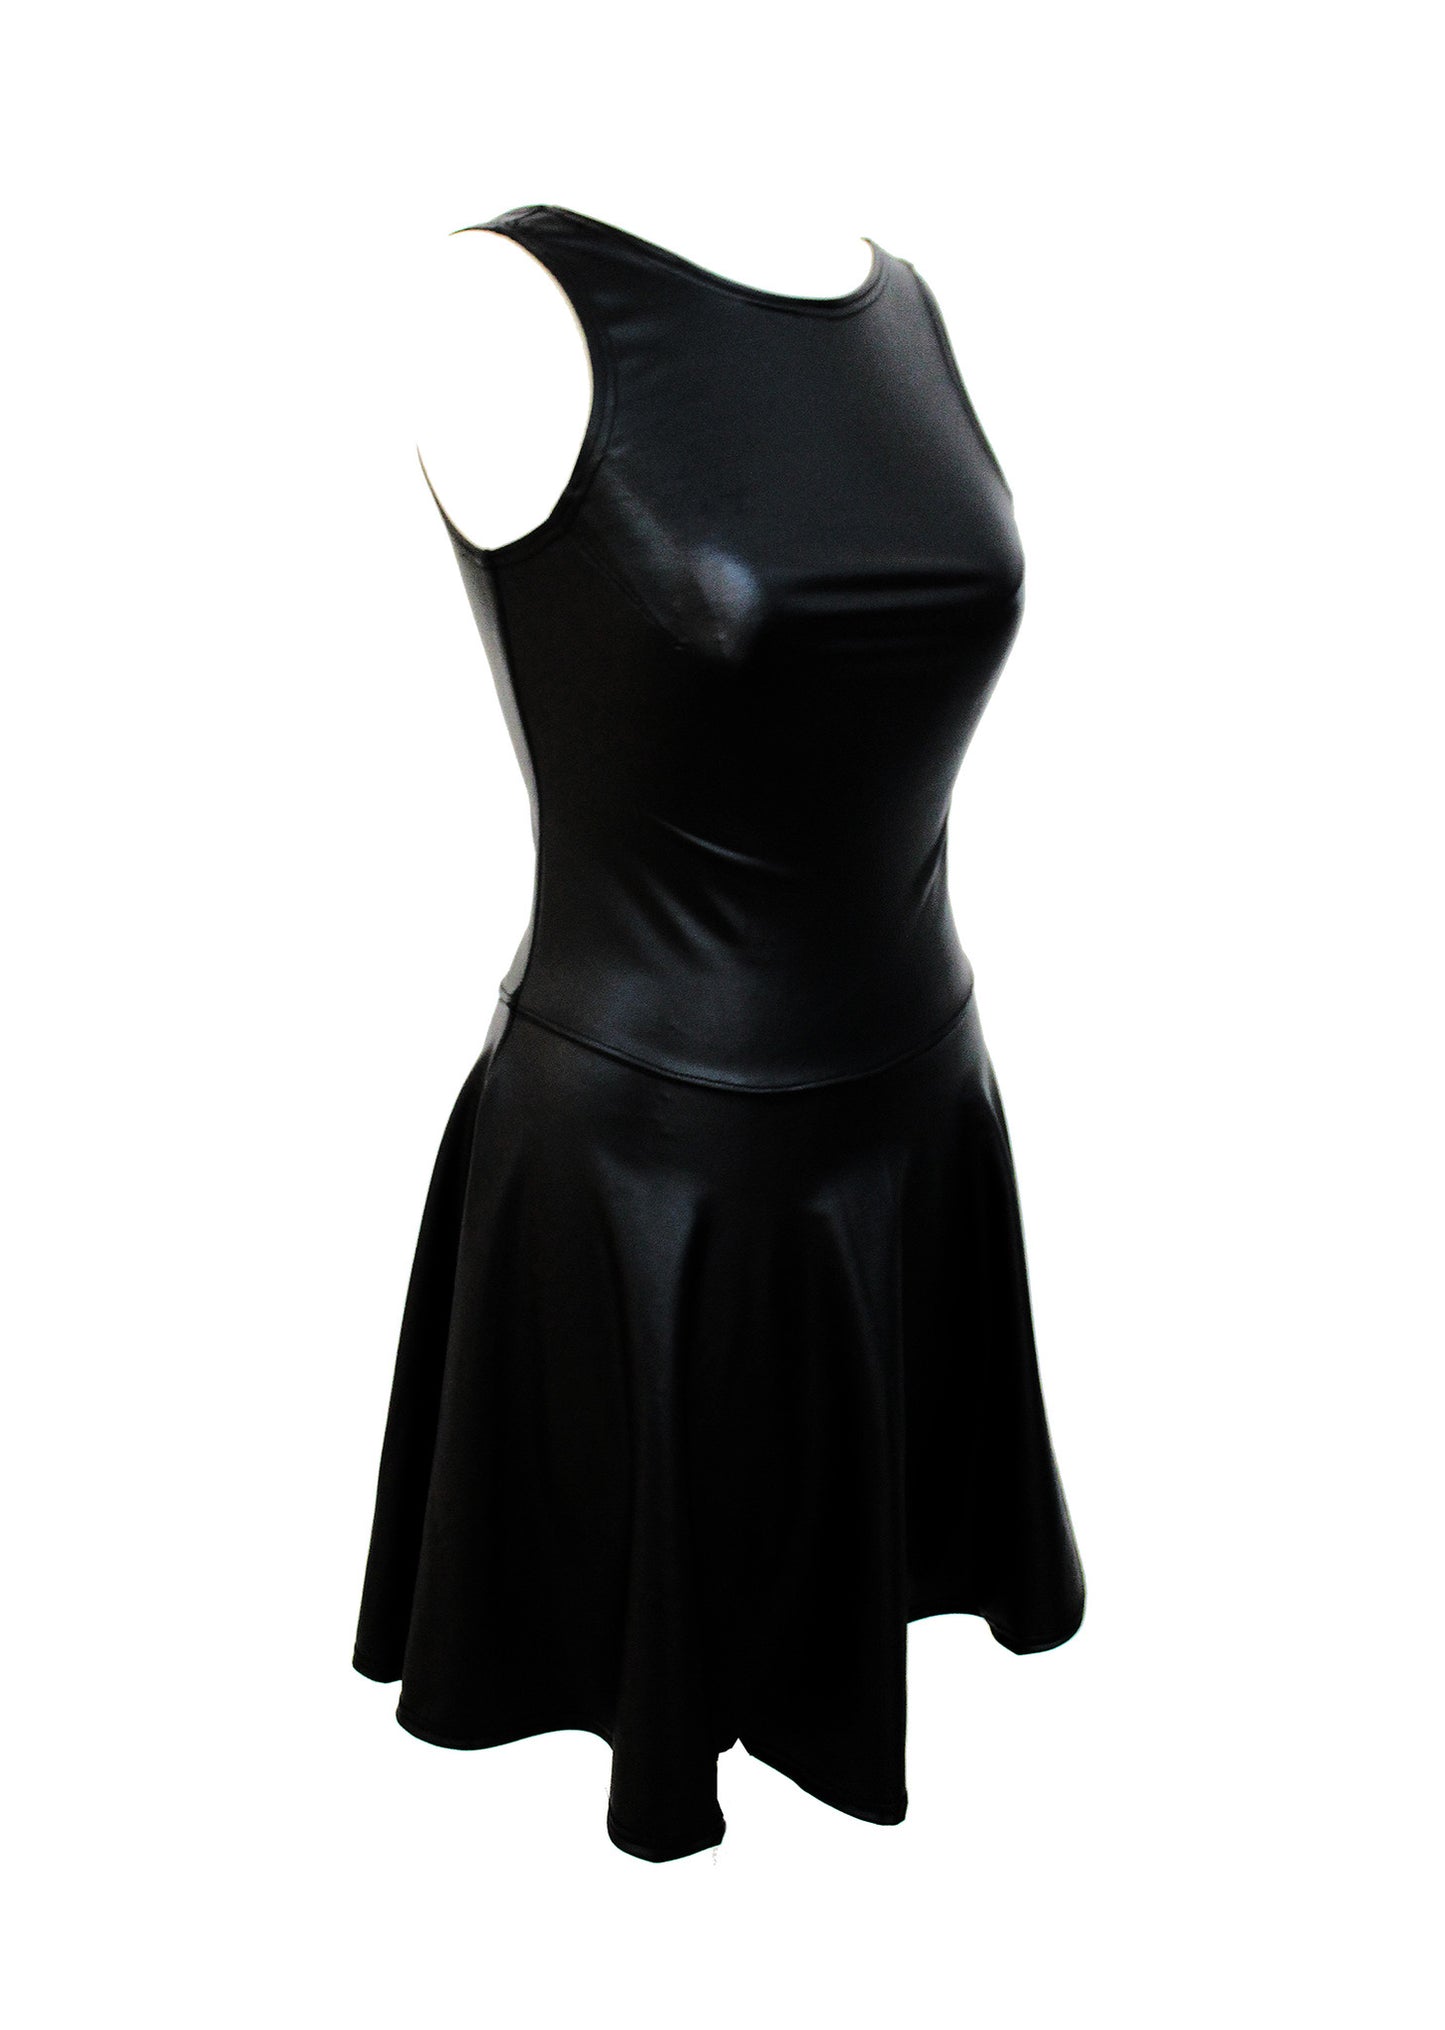 The Calipso black matte spandex skater dress